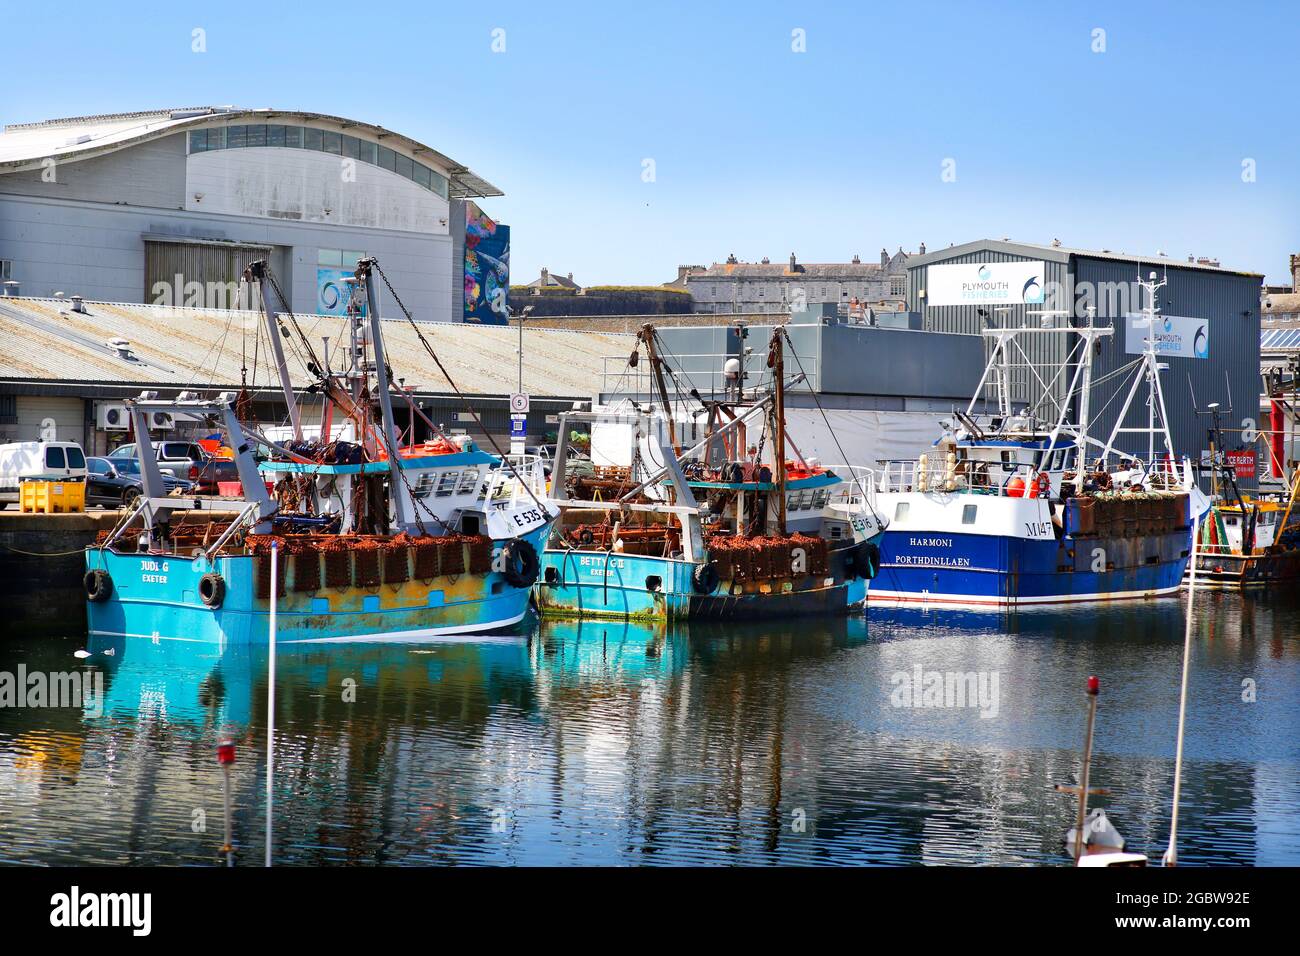 Fish market in Sutton Harbour, Plymouth, Devon, UK. Stock Photo